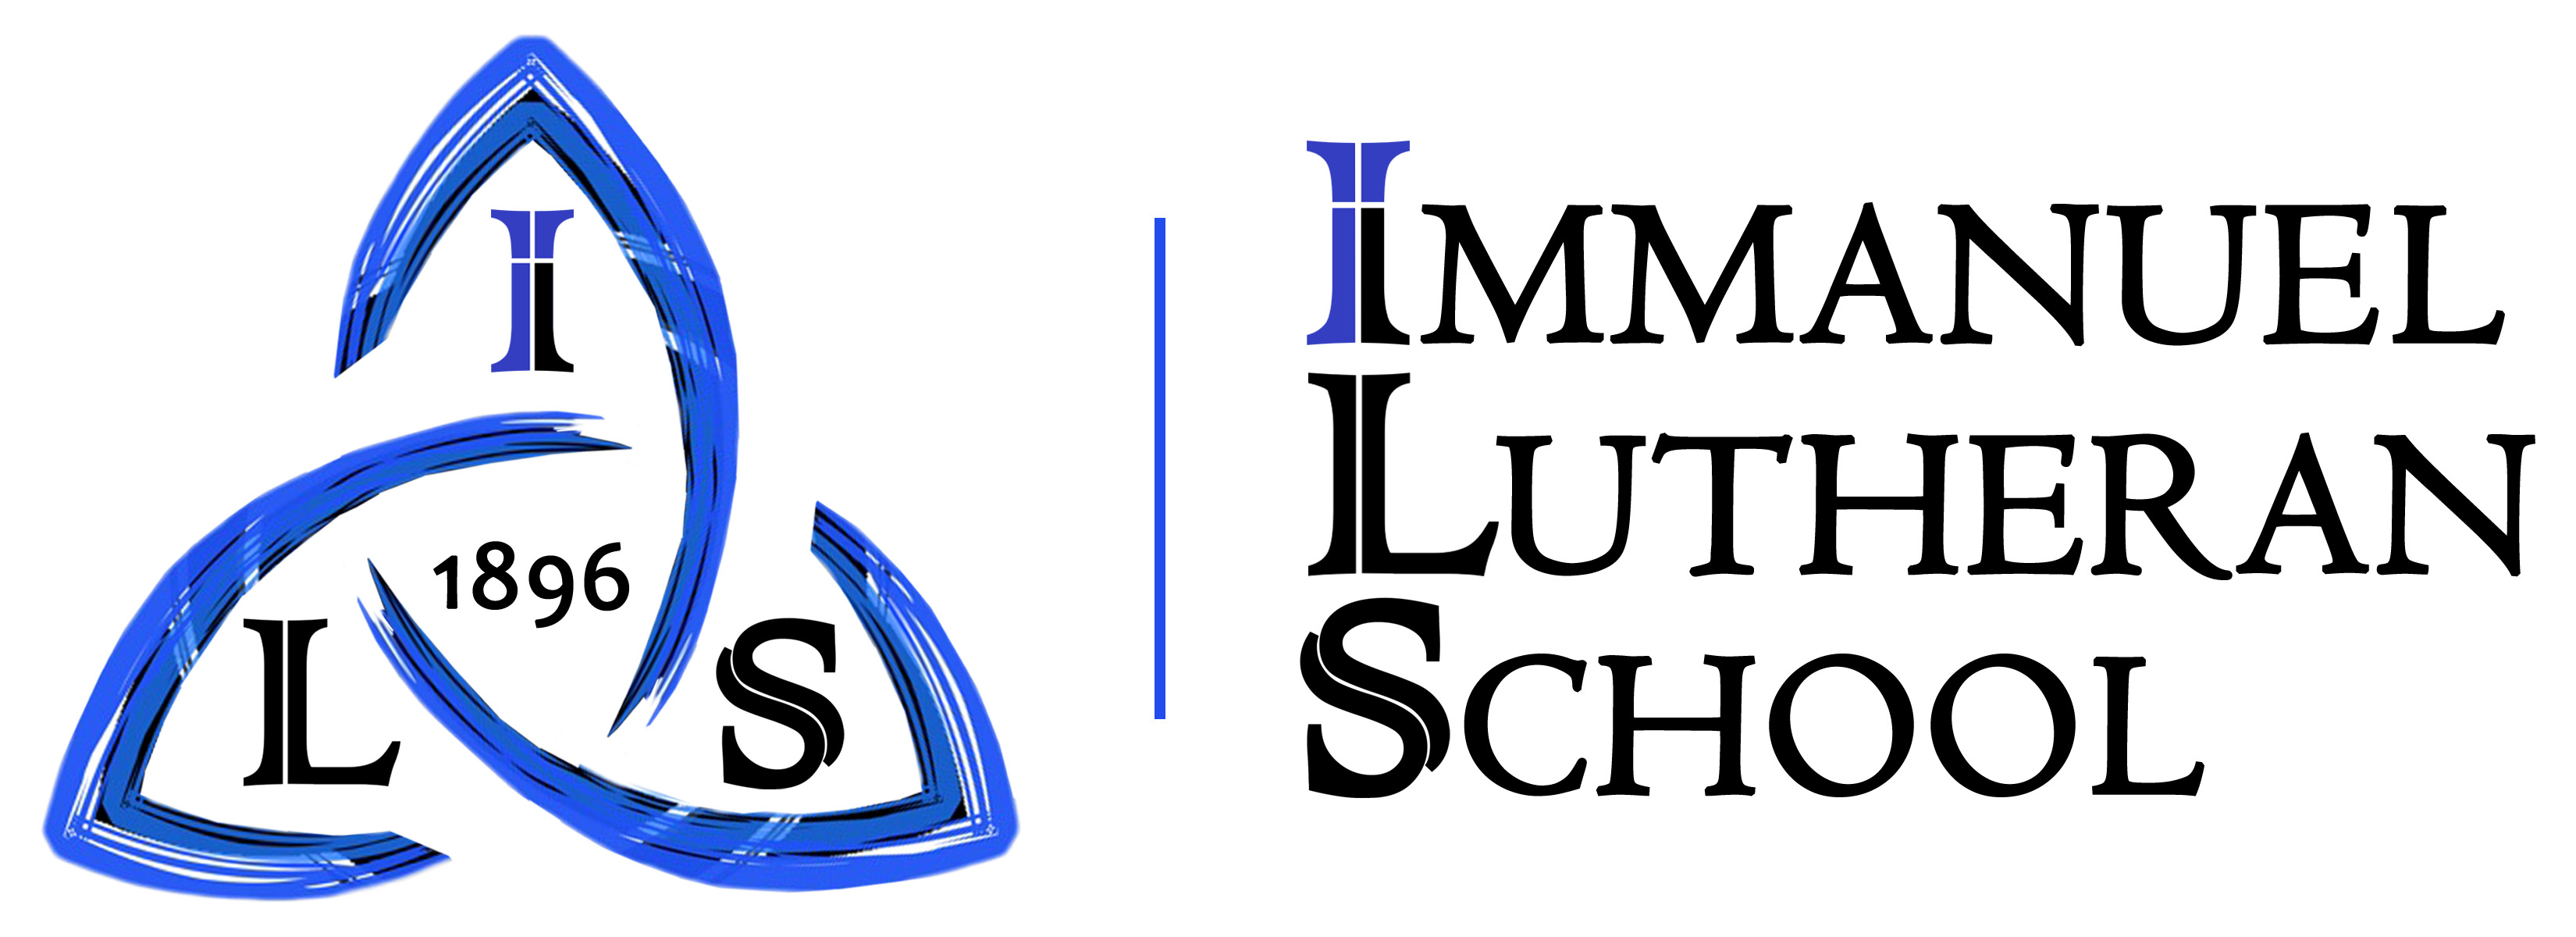 Immanuel Lutheran Church and School logo